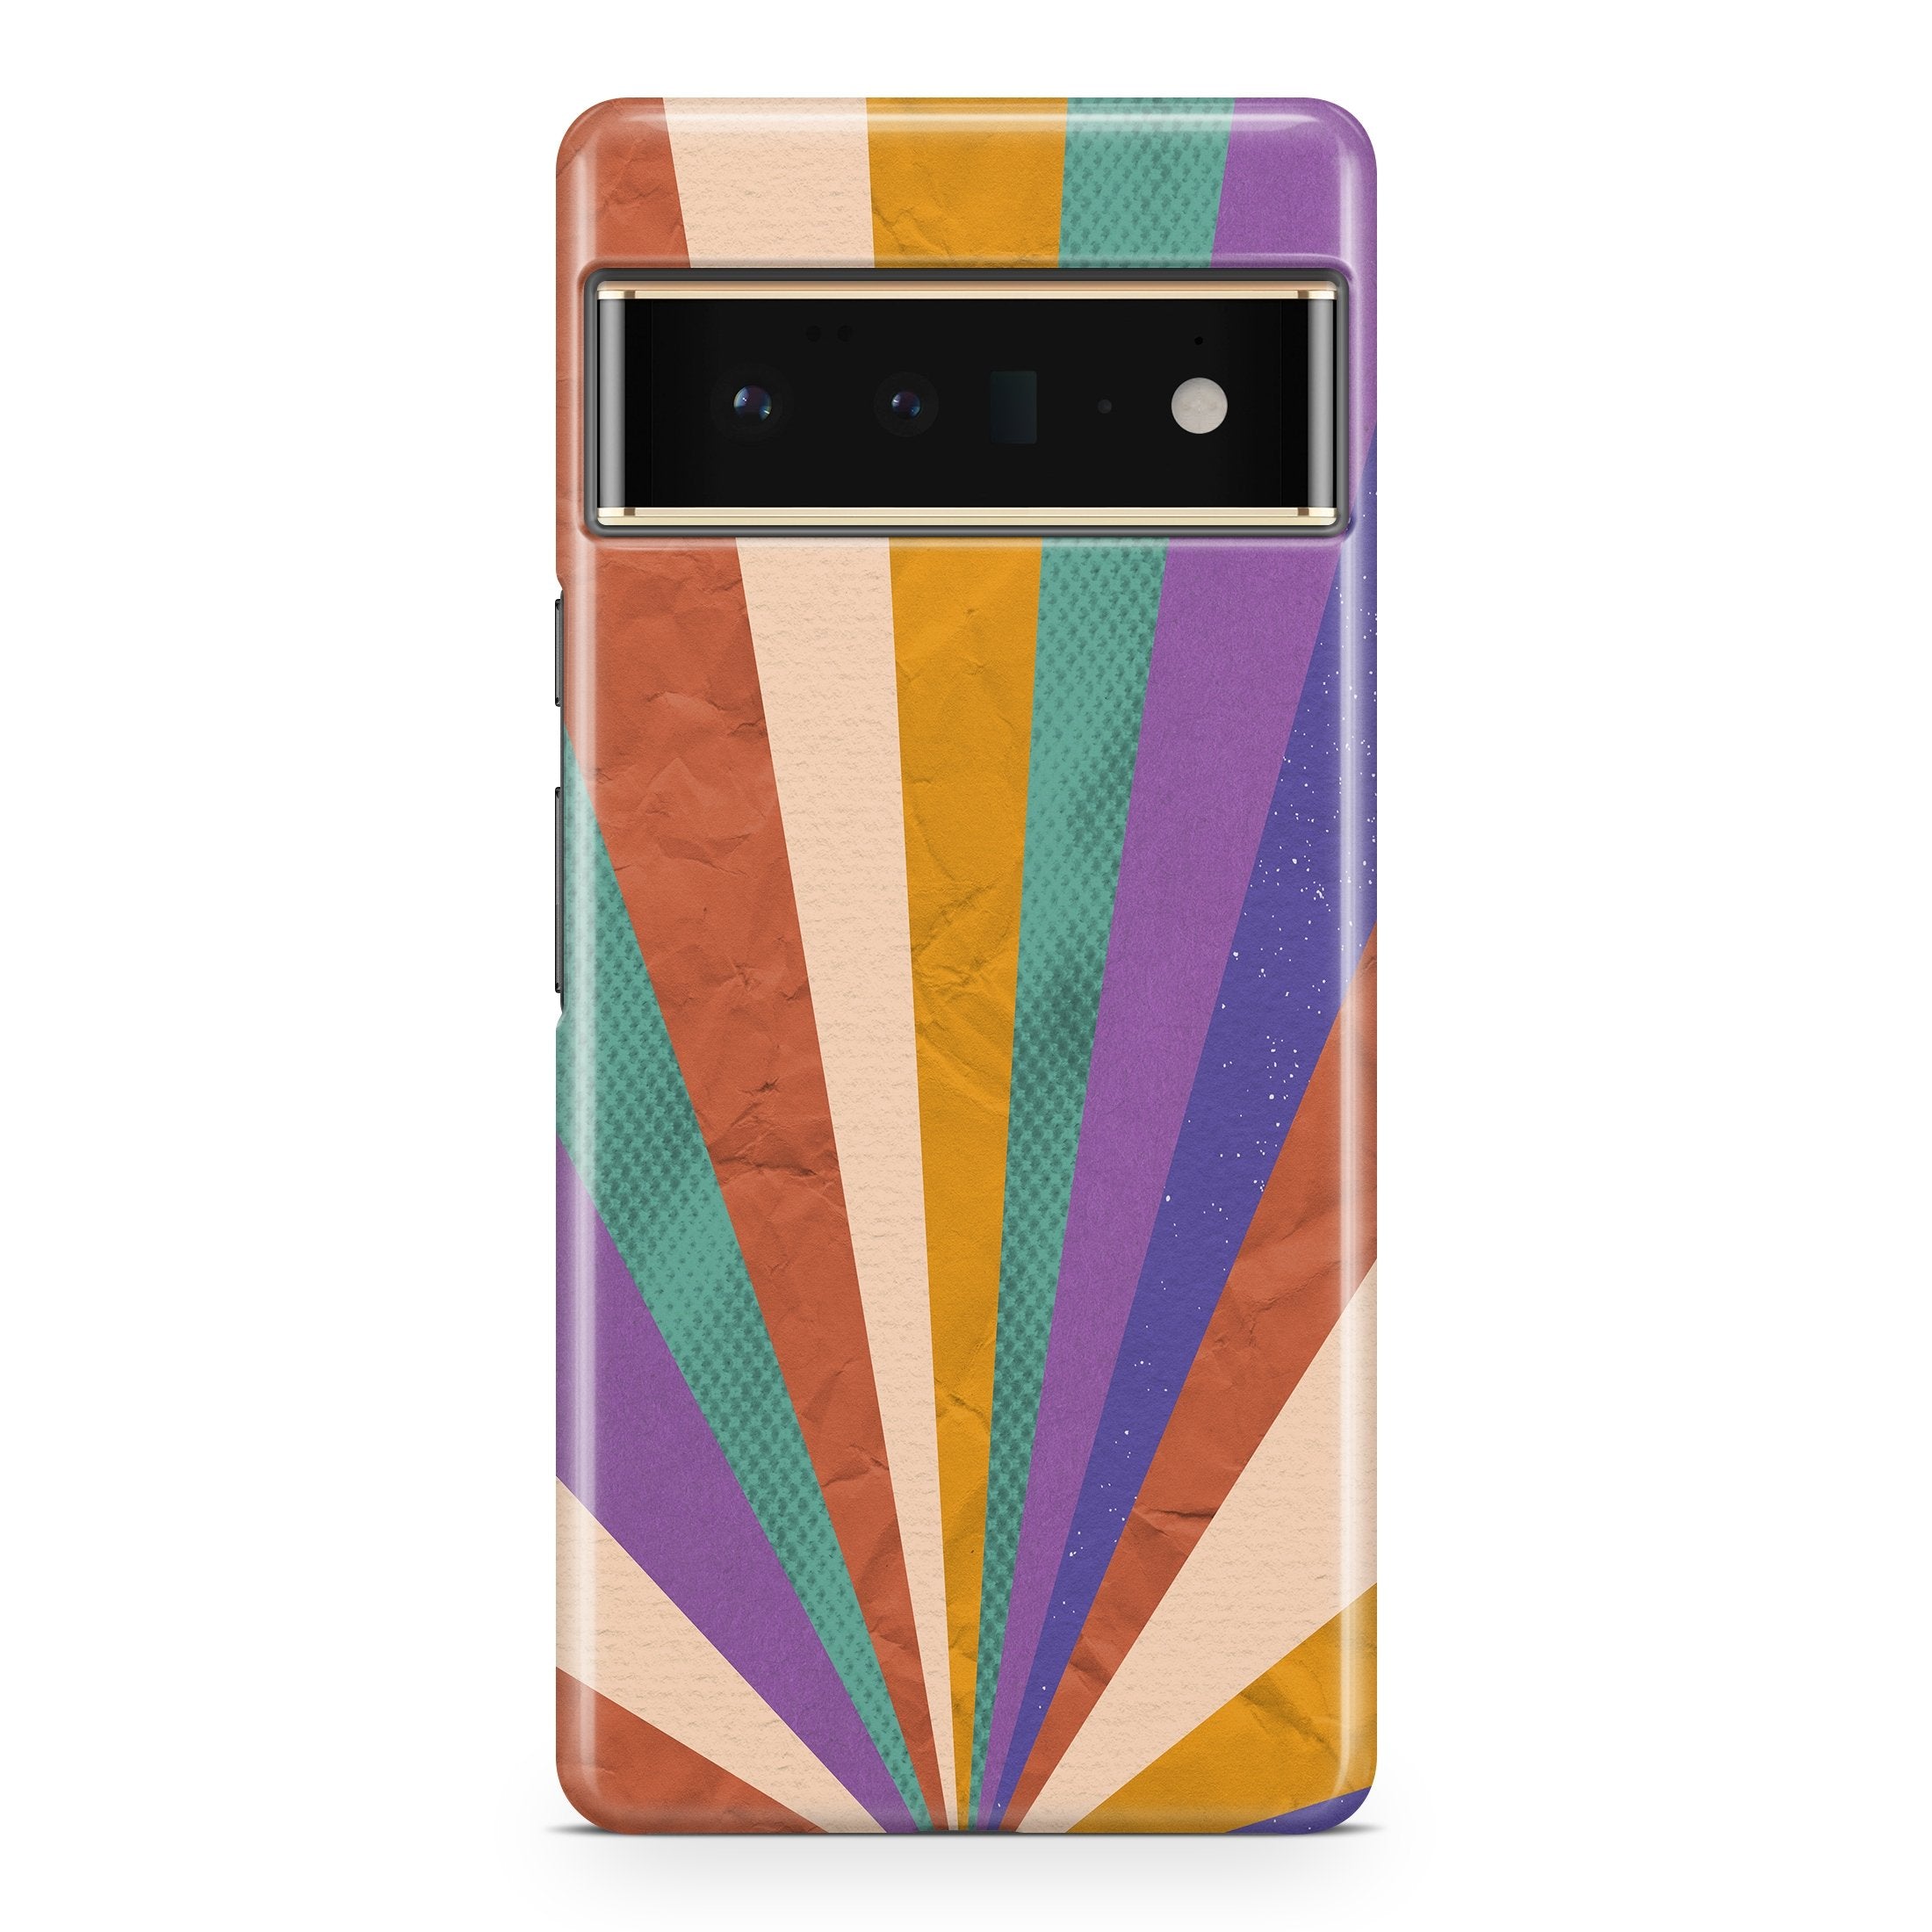 Retro Blast - Google phone case designs by CaseSwagger